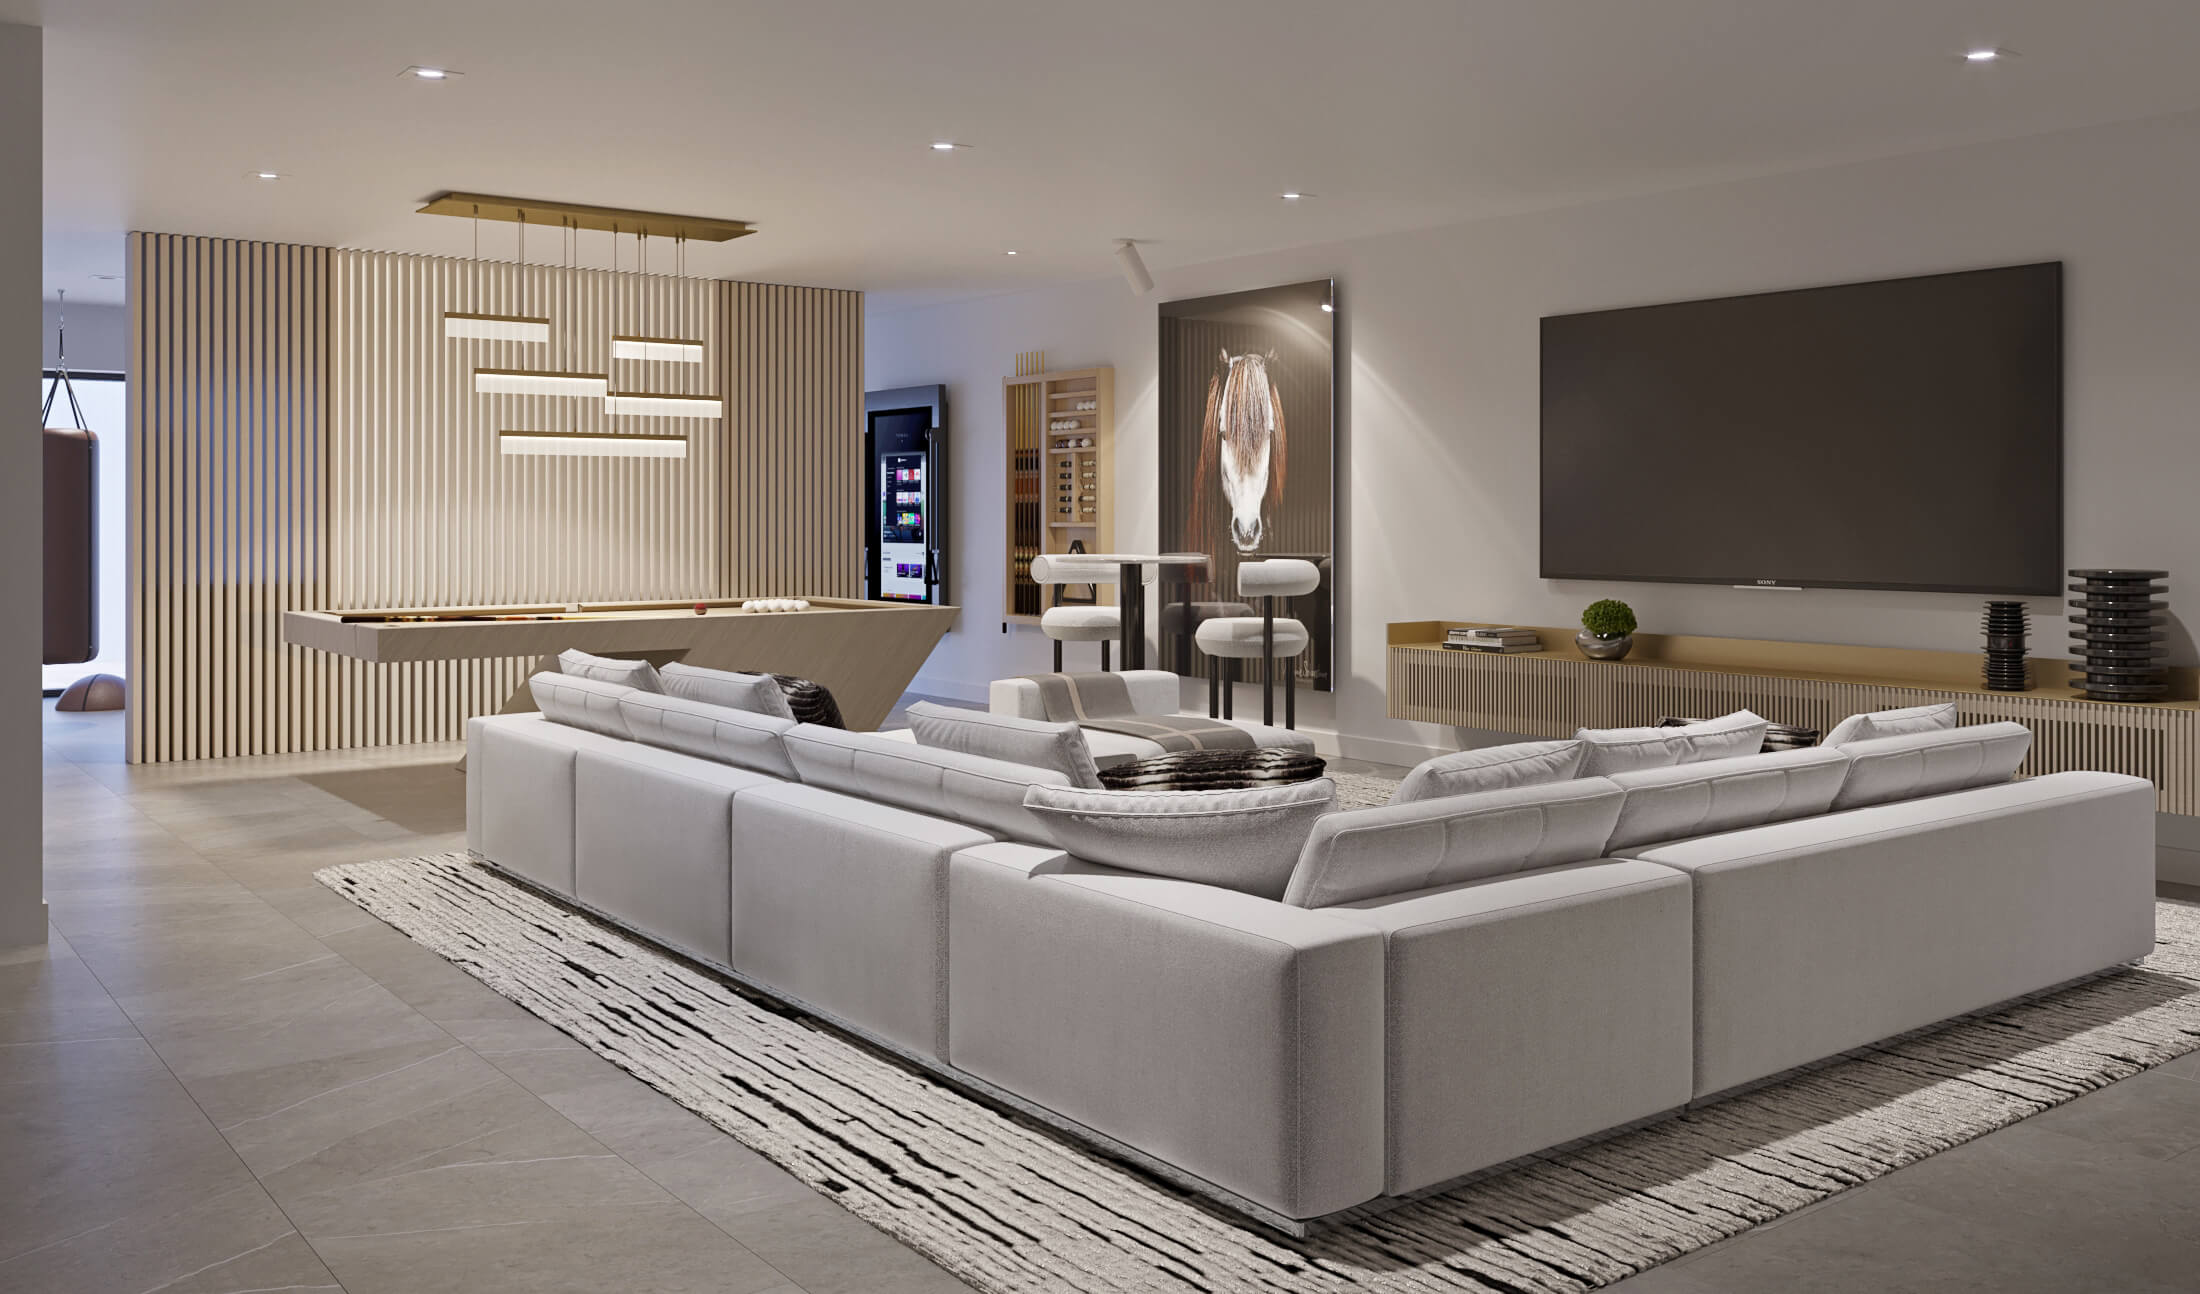 MILINA: Show-stopping Champagne Living Room by Britto Charette, Miami Interior Designer Firm.